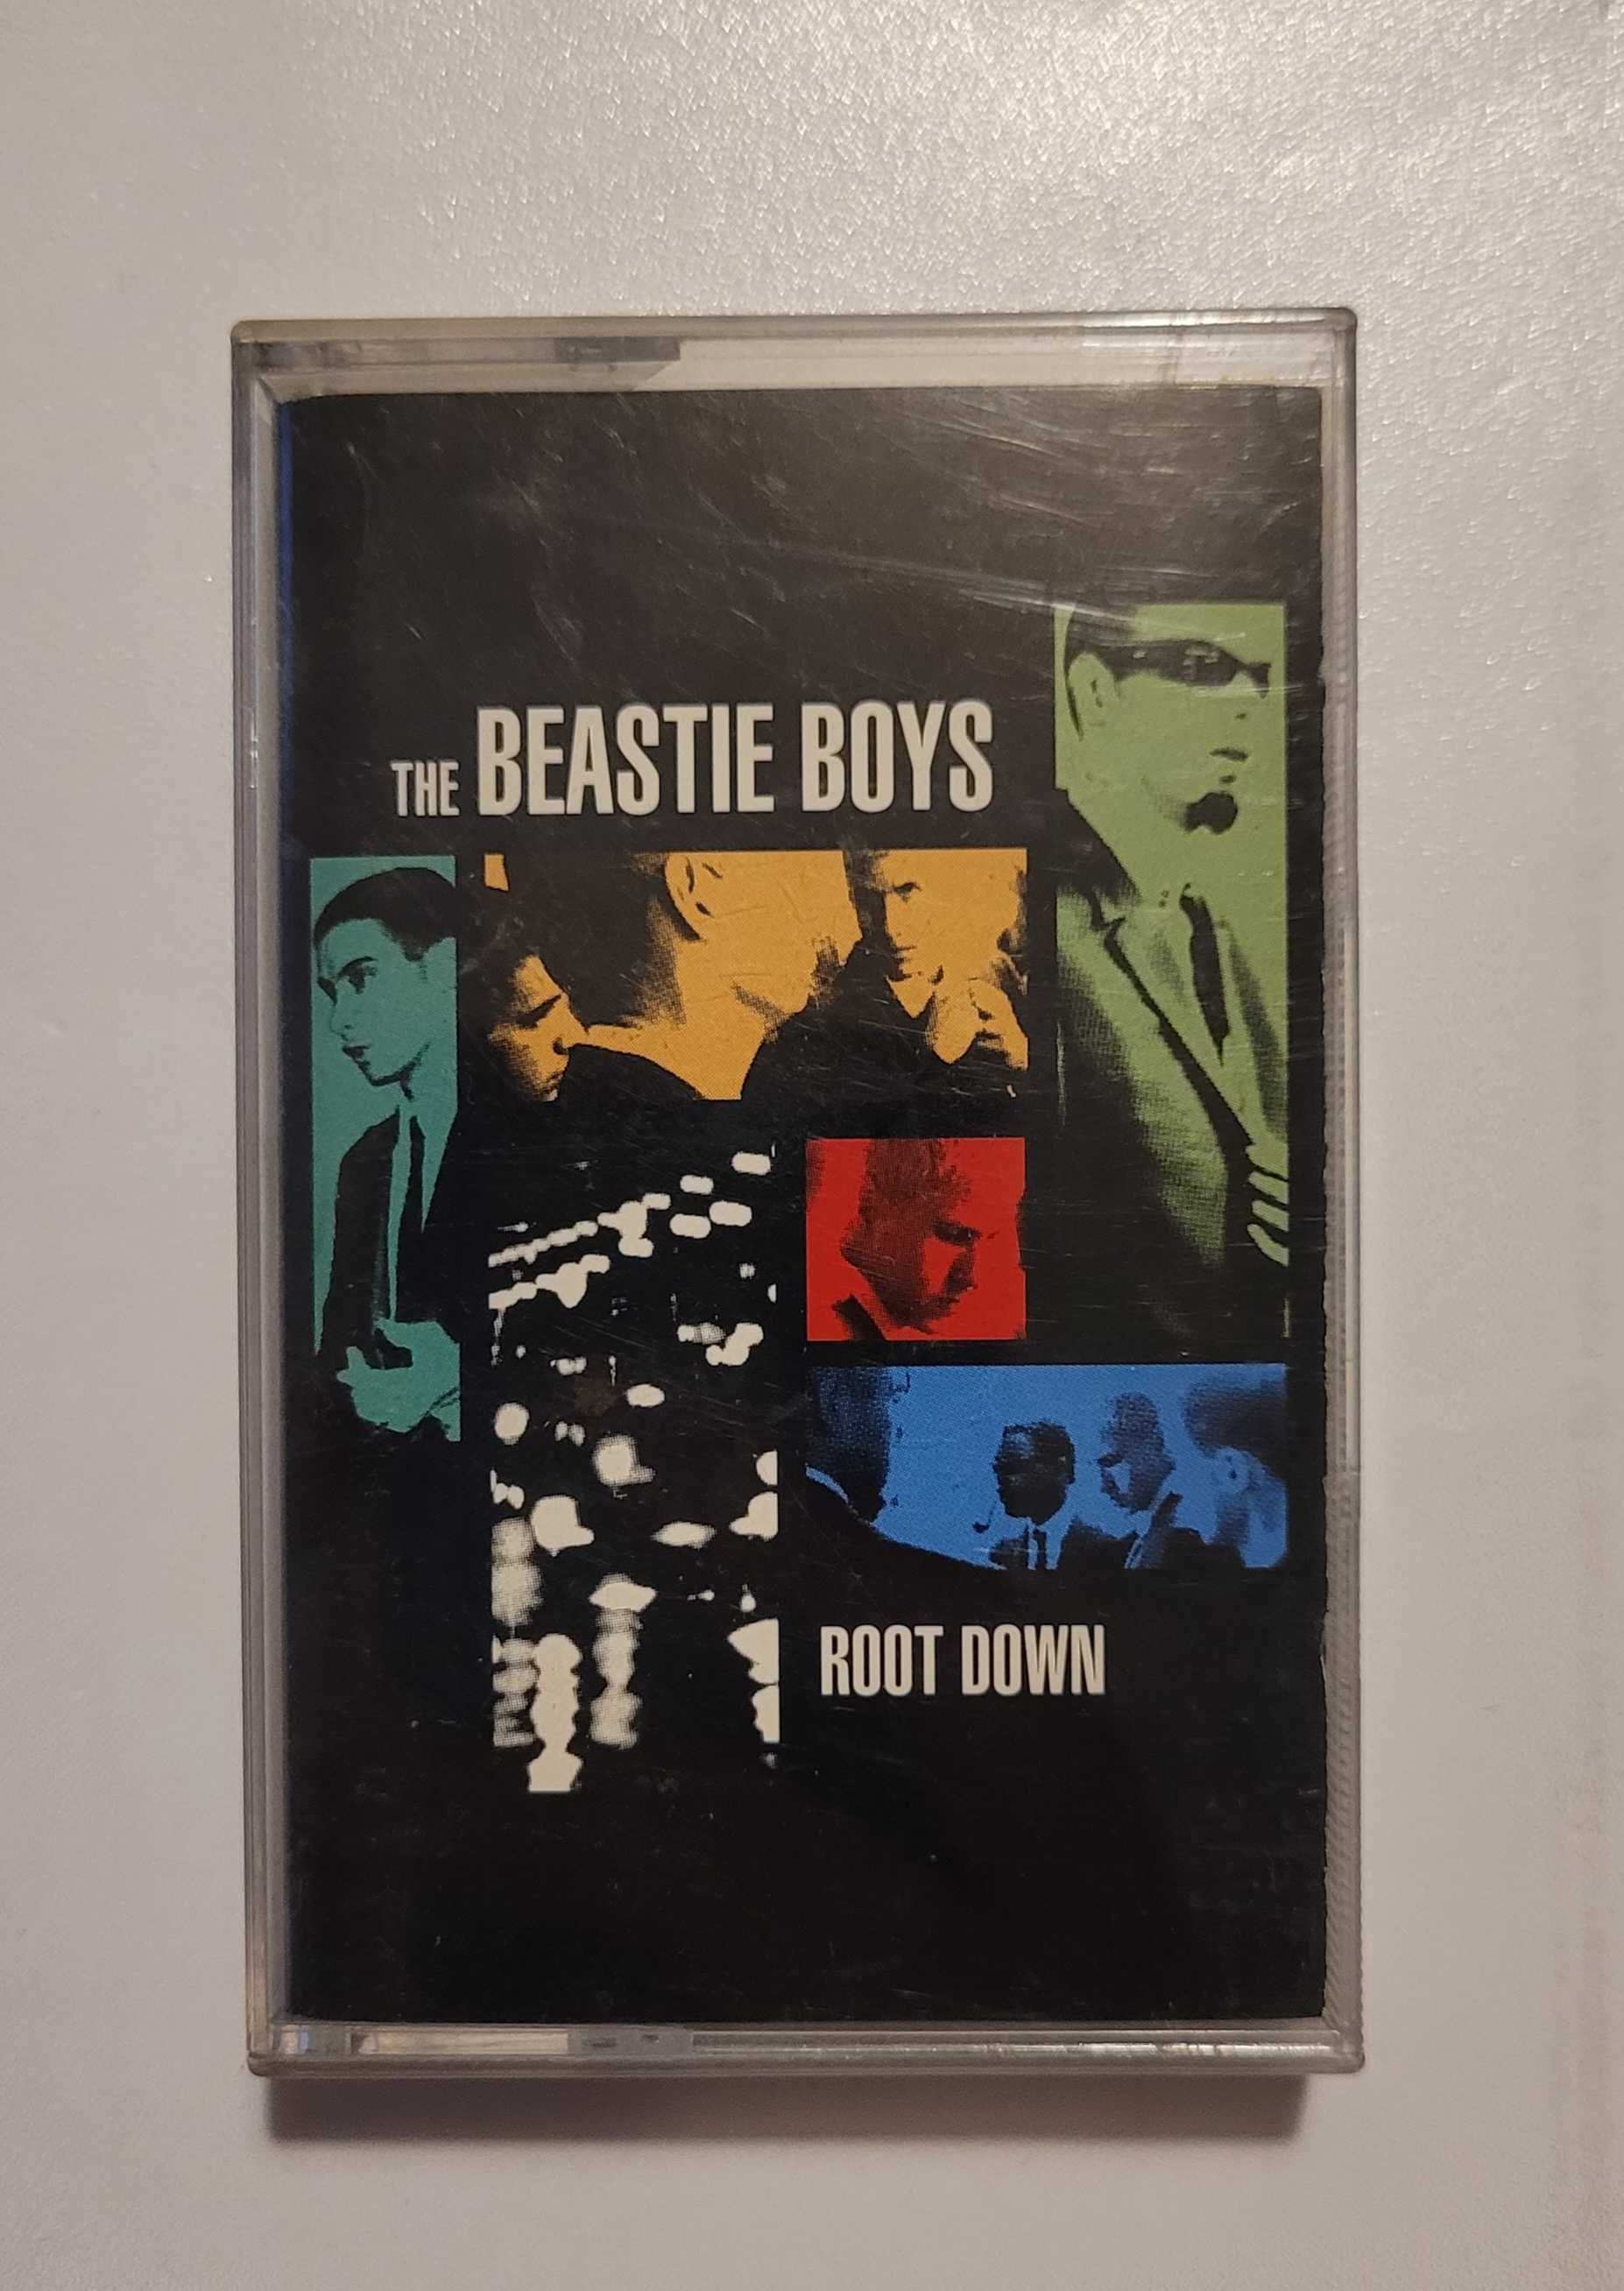 Kaseta magnetofonowa - The Beastie Boys, "Root Down"